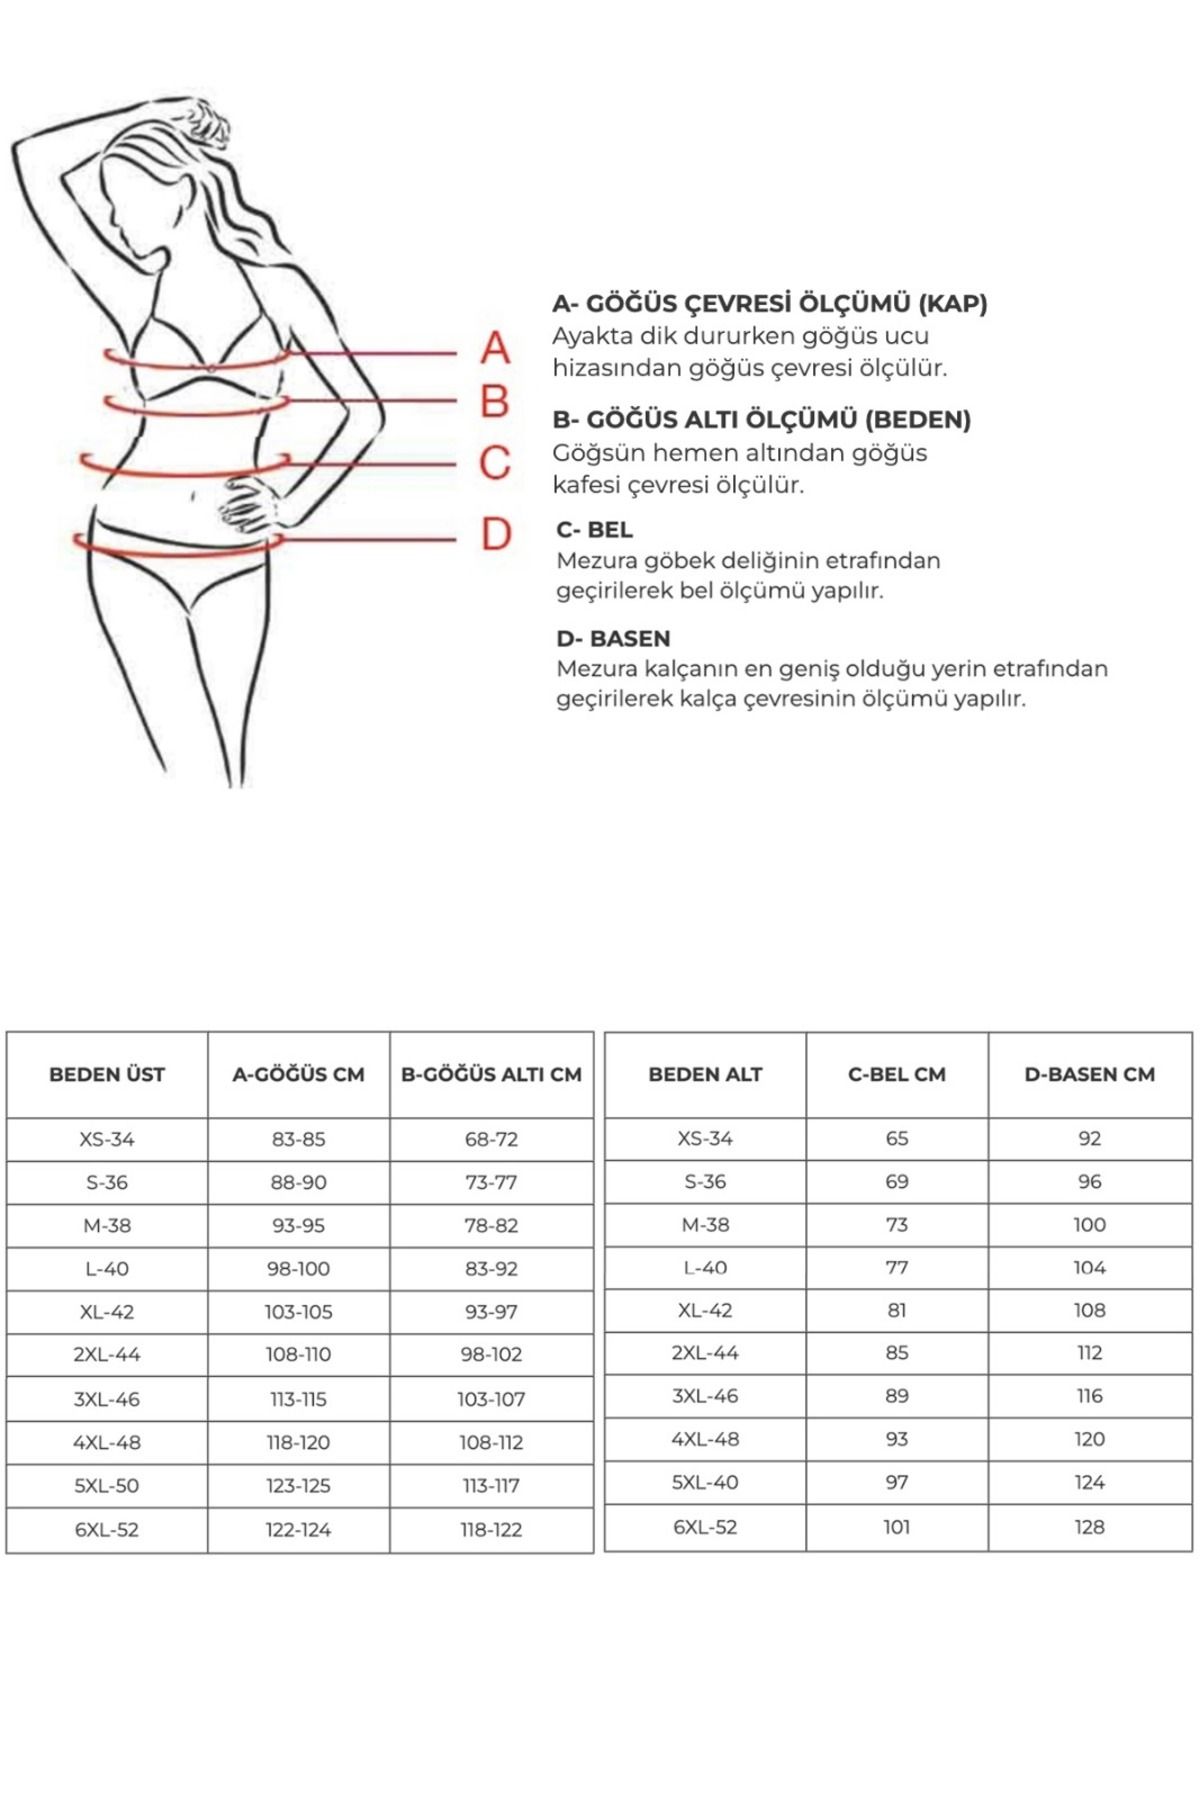 Women's Cacique Reversible Bikini Bottom